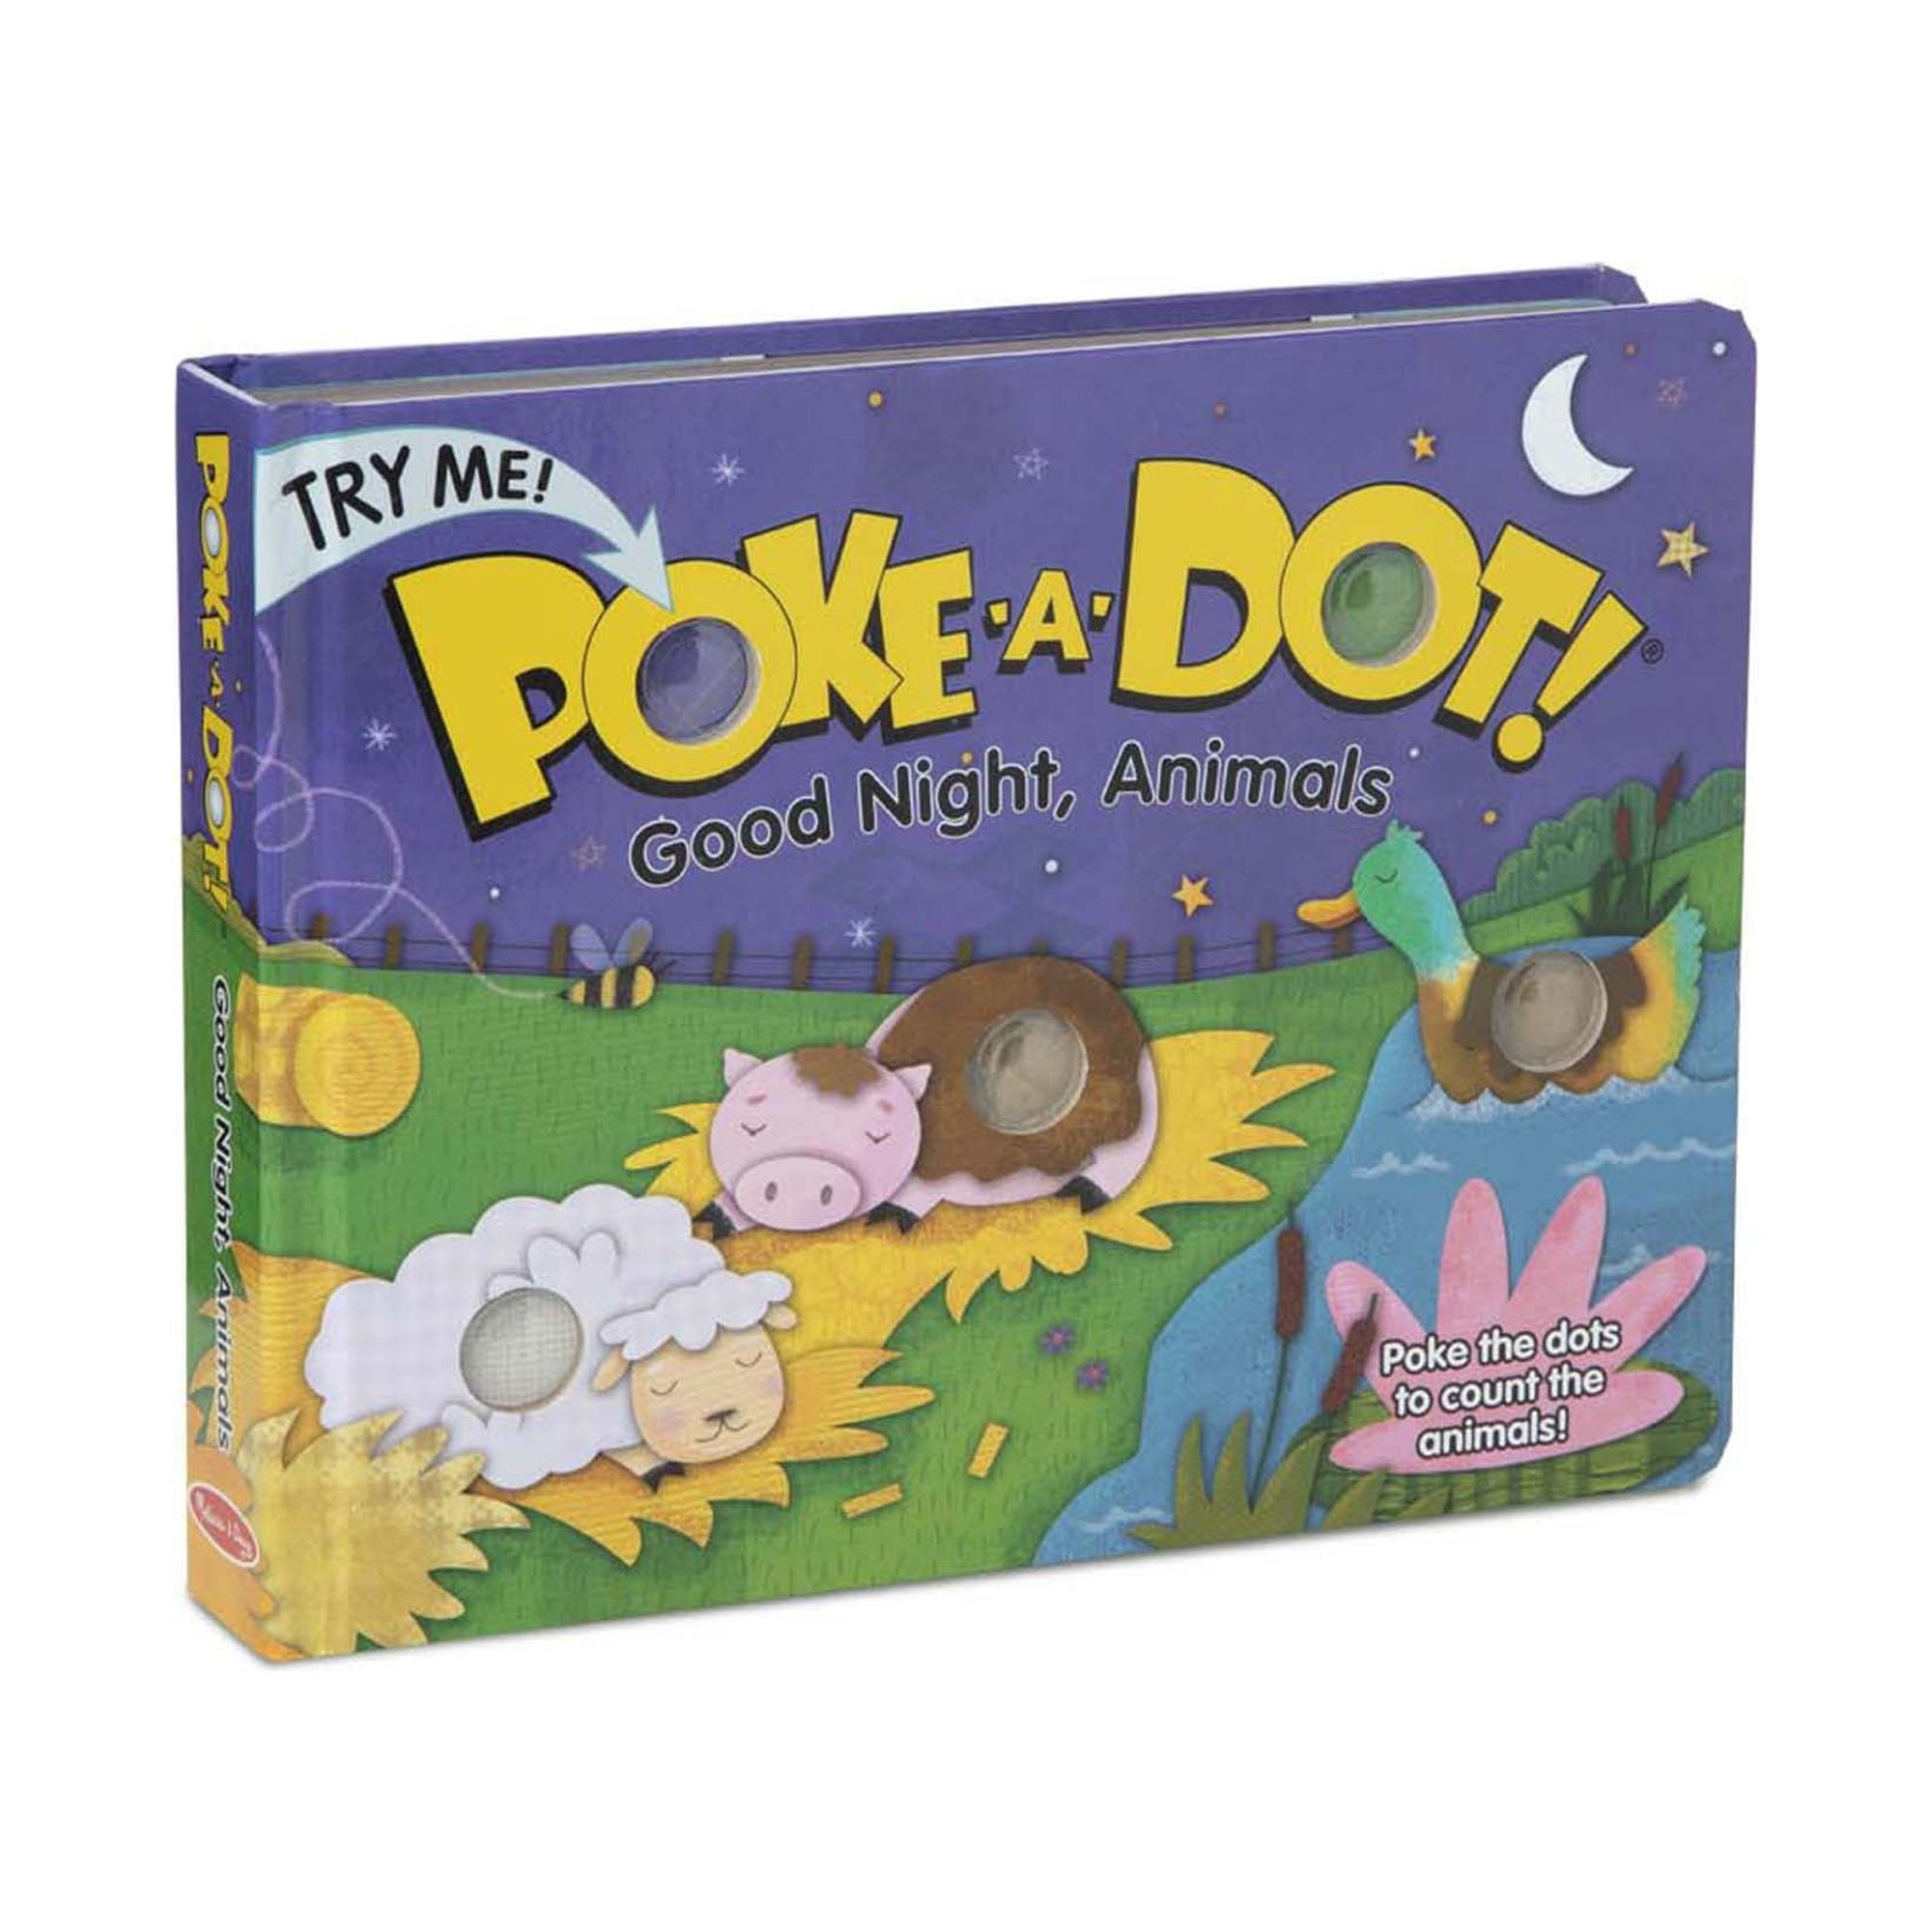 Poke-A-Dot: Things That Go [Book]